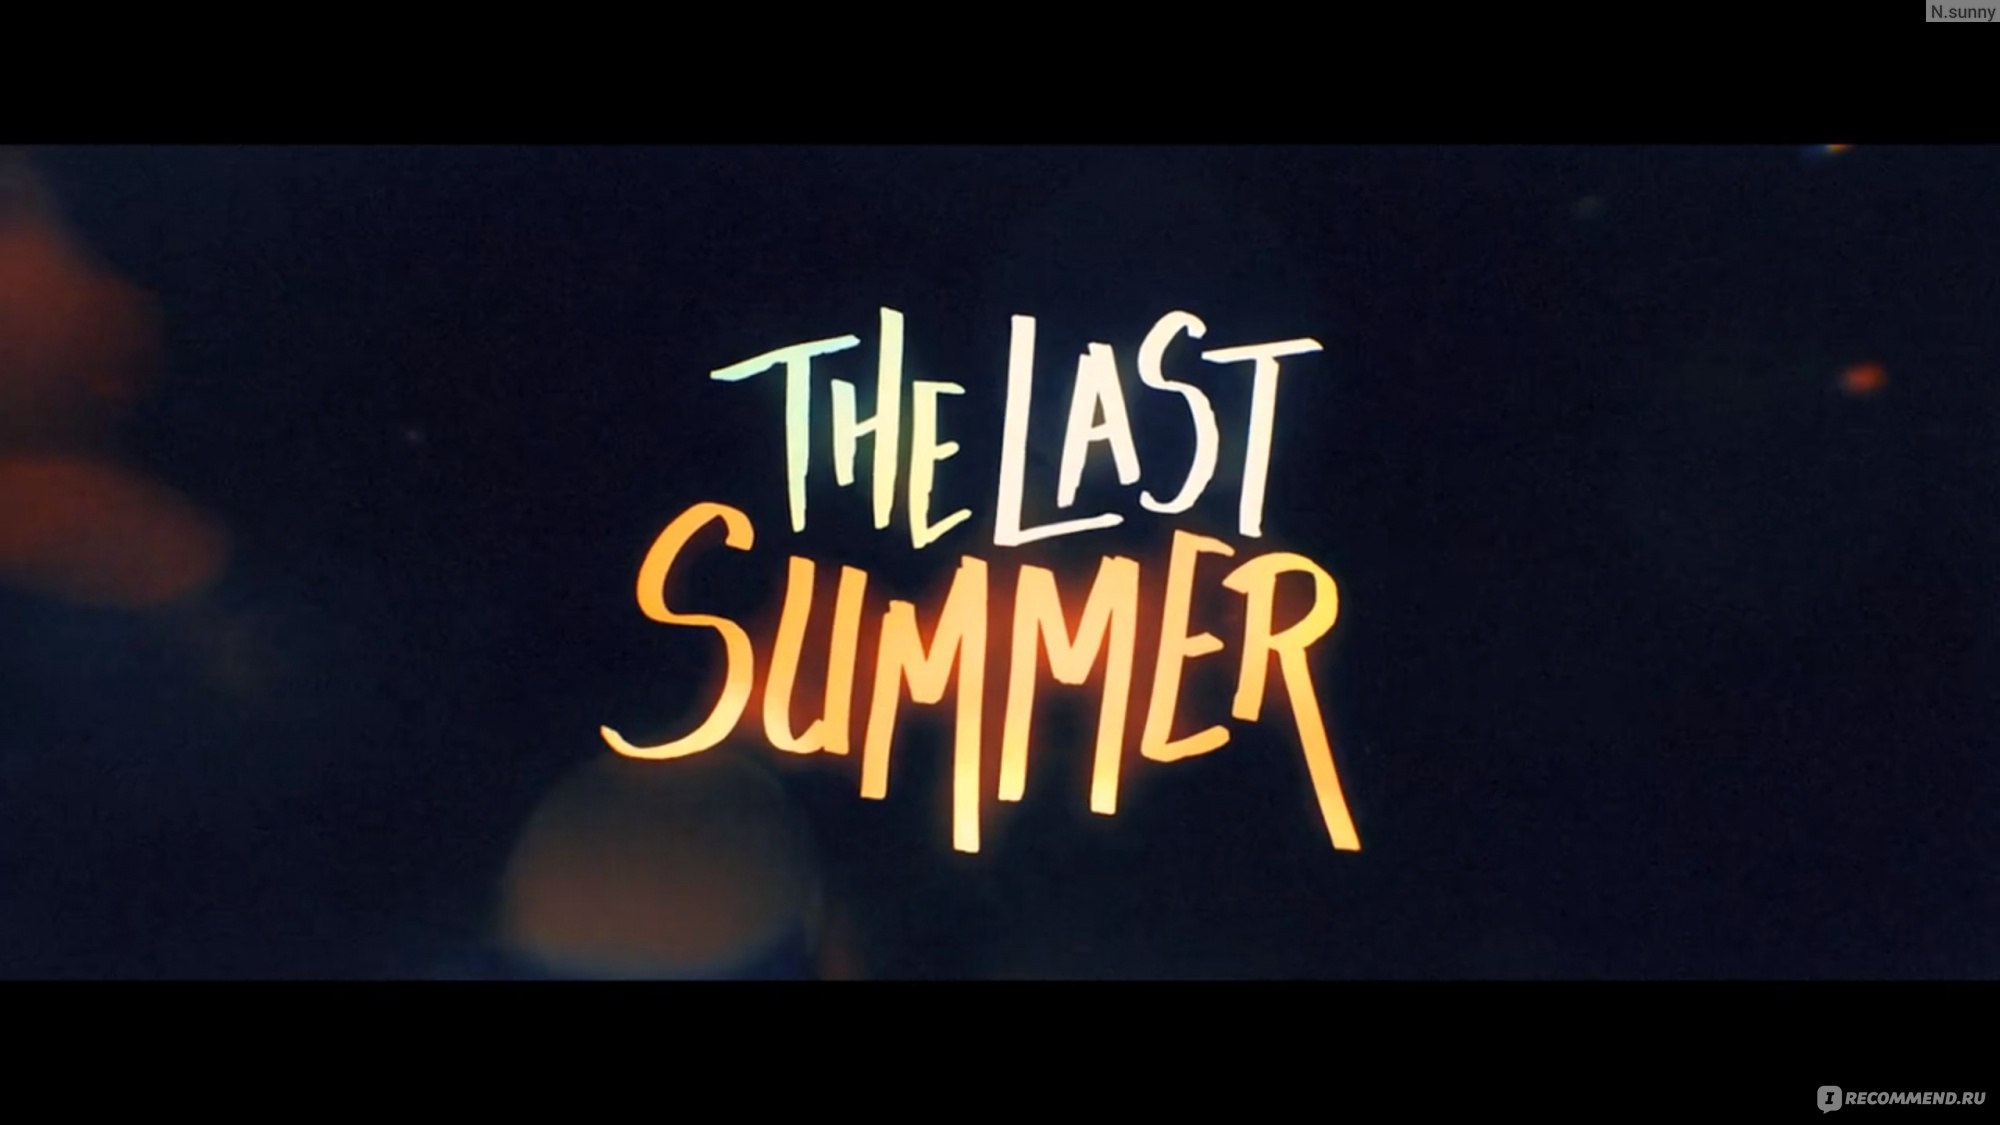 Ласт саммер песня. Last Summer. The last Summer 2019. Summer надпись. The last Lesson надпись.